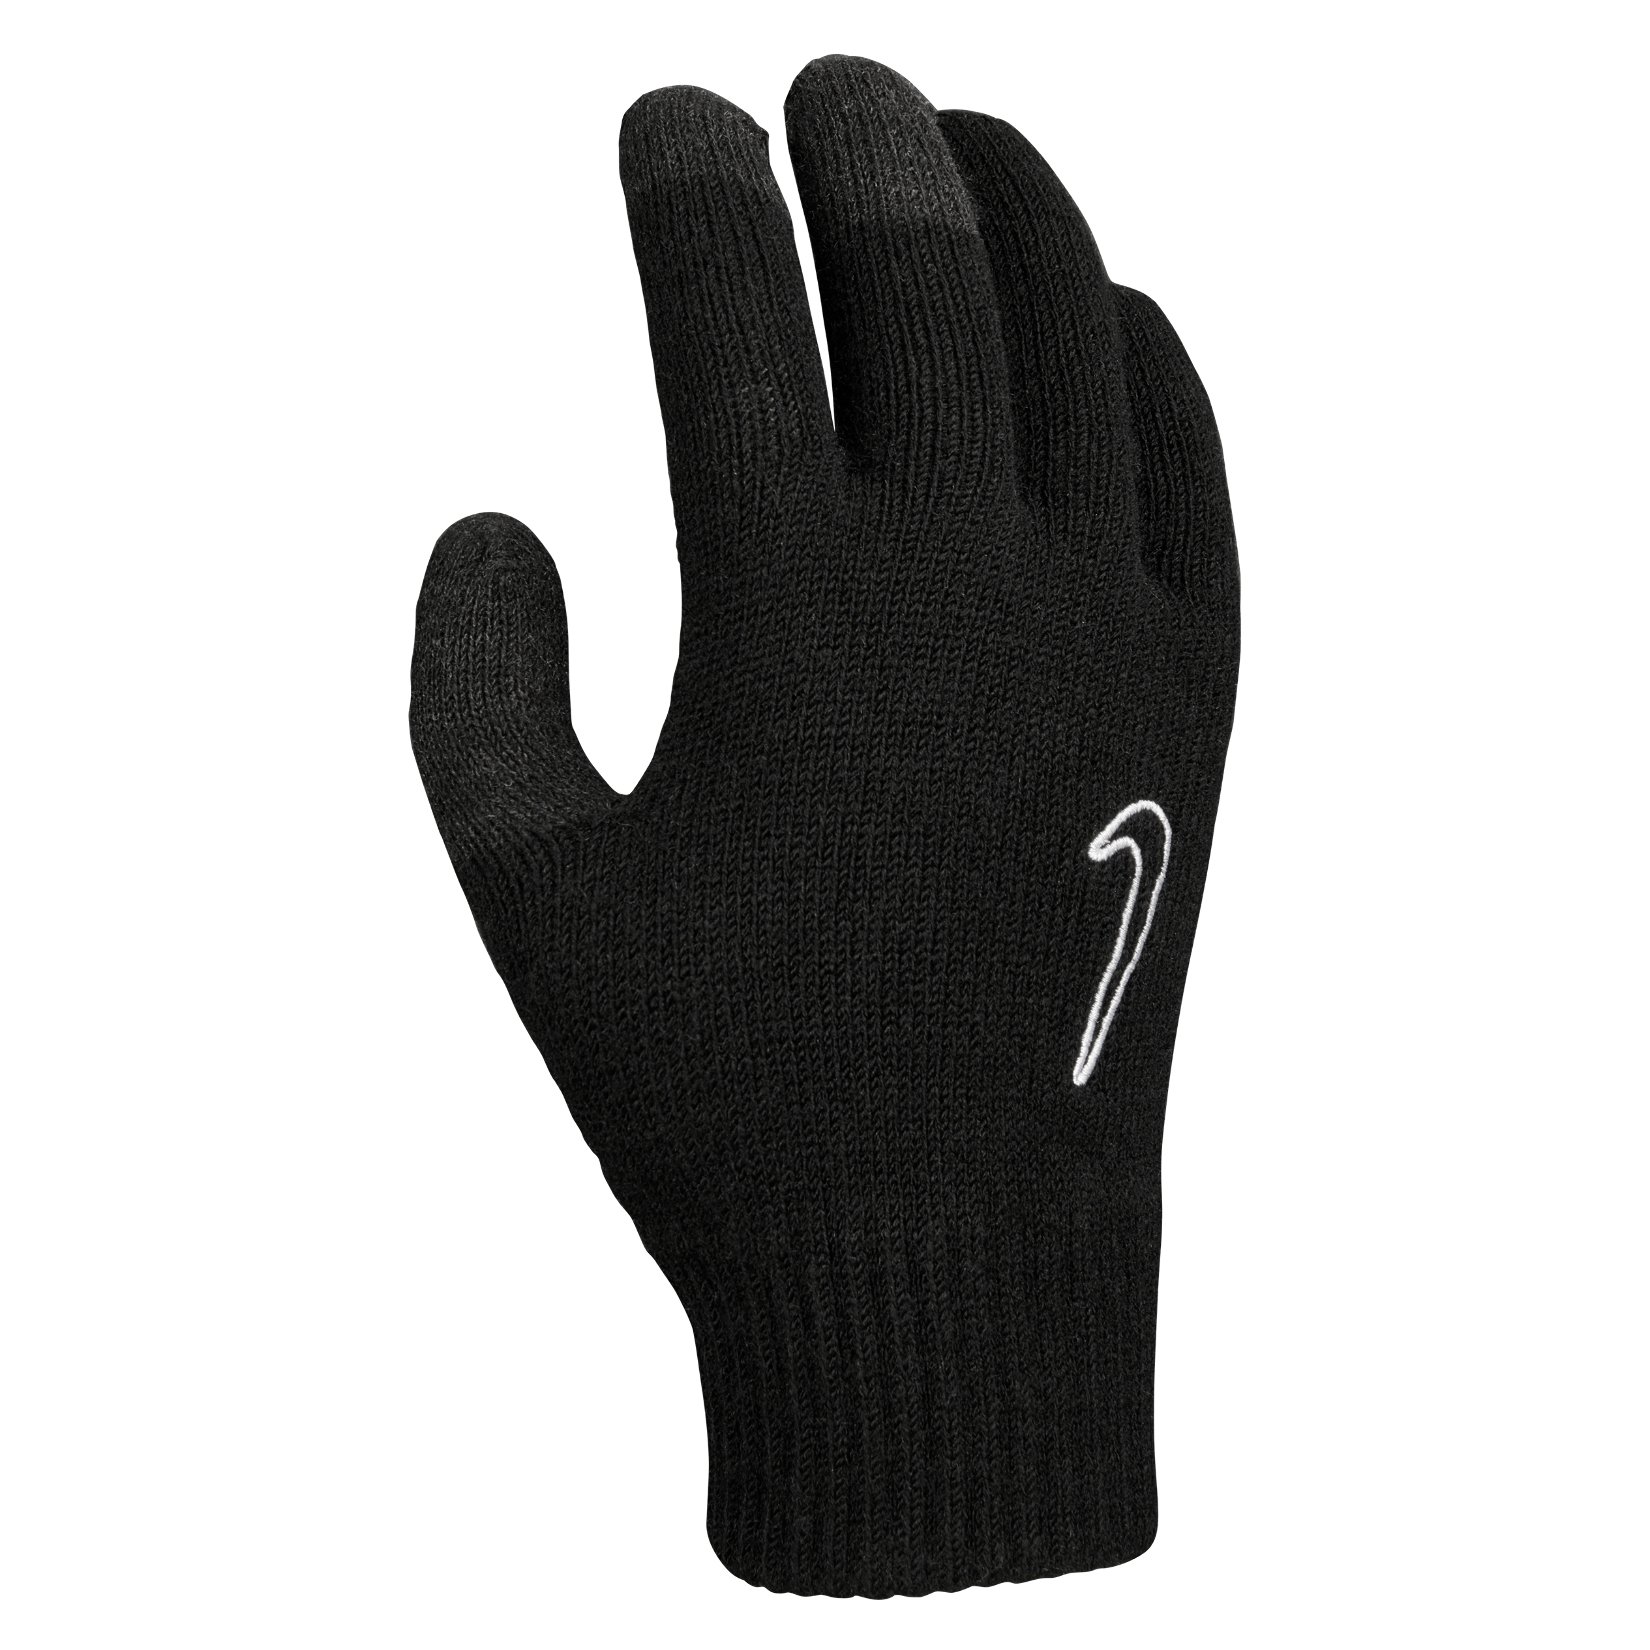 Nike Knitted Tech And Grip Gloves 2.0 - Kitlocker.com